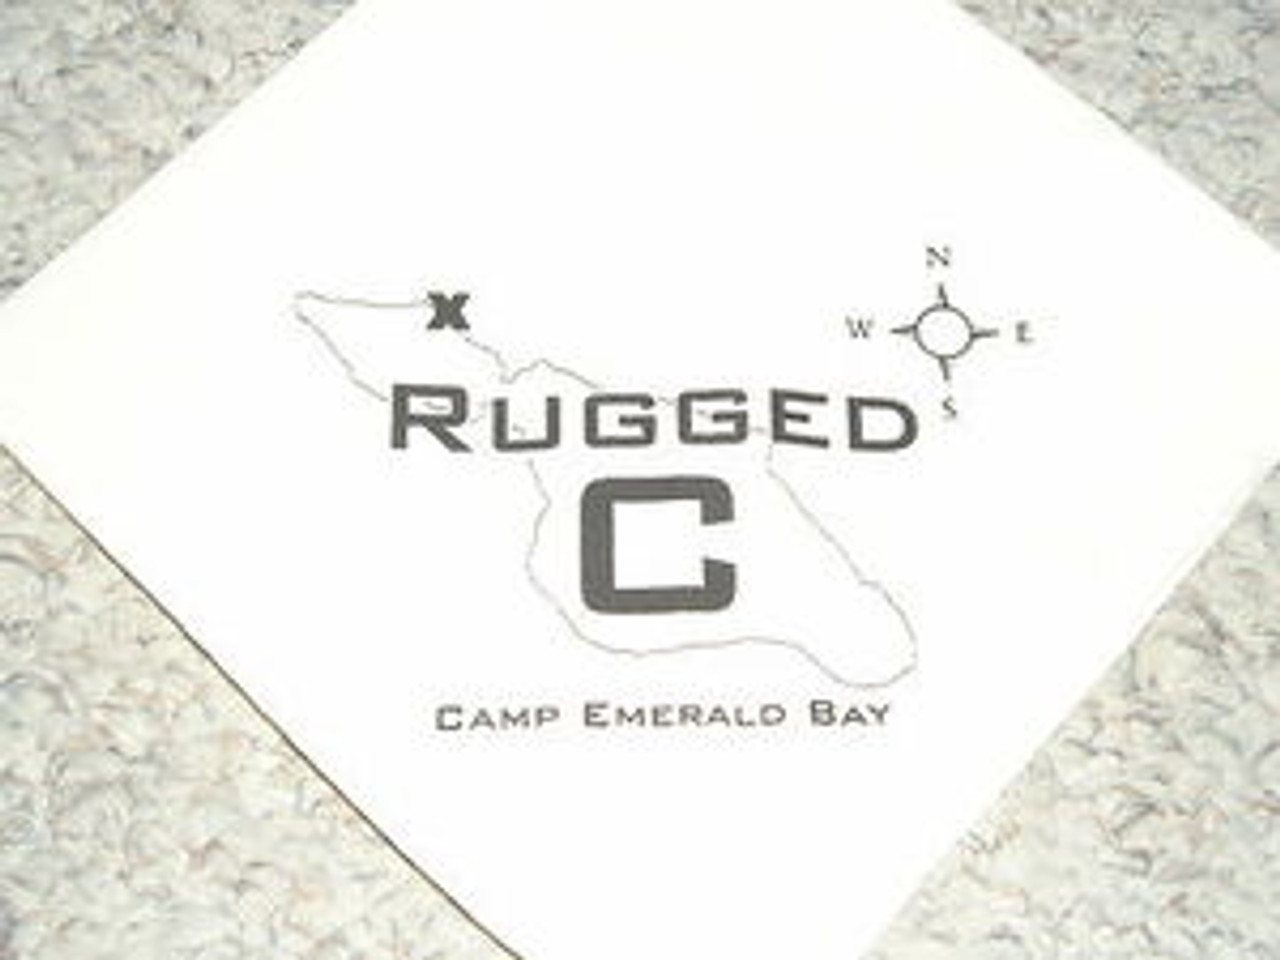 Camp Emerald Bay - Rugged C (Canoe) Neckerchief - Very RARE